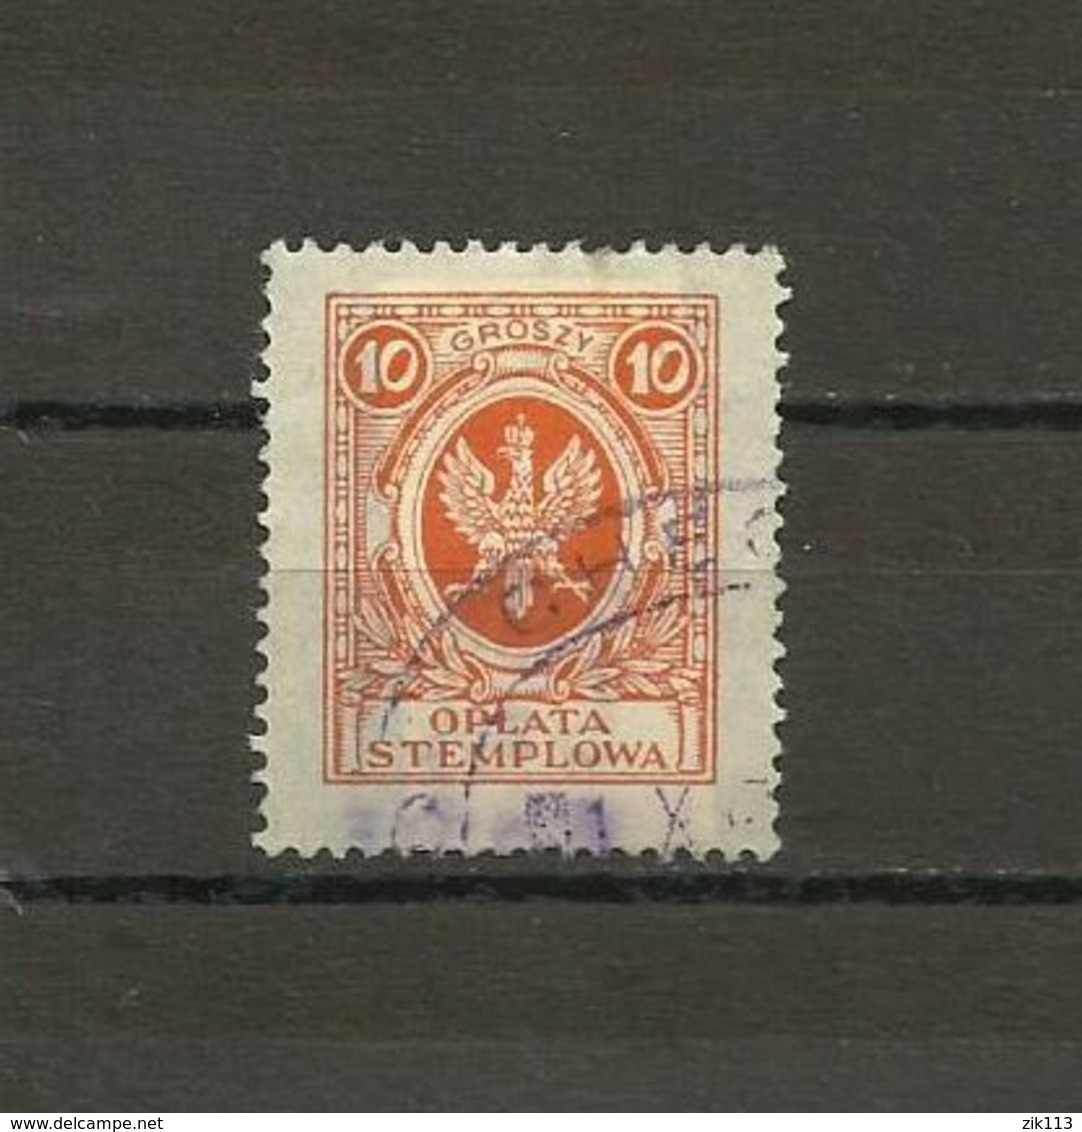 Poland, Polen - Stamp Fee, Stempelgebuhr, 10 Groszy, Revenue - Revenue Stamps